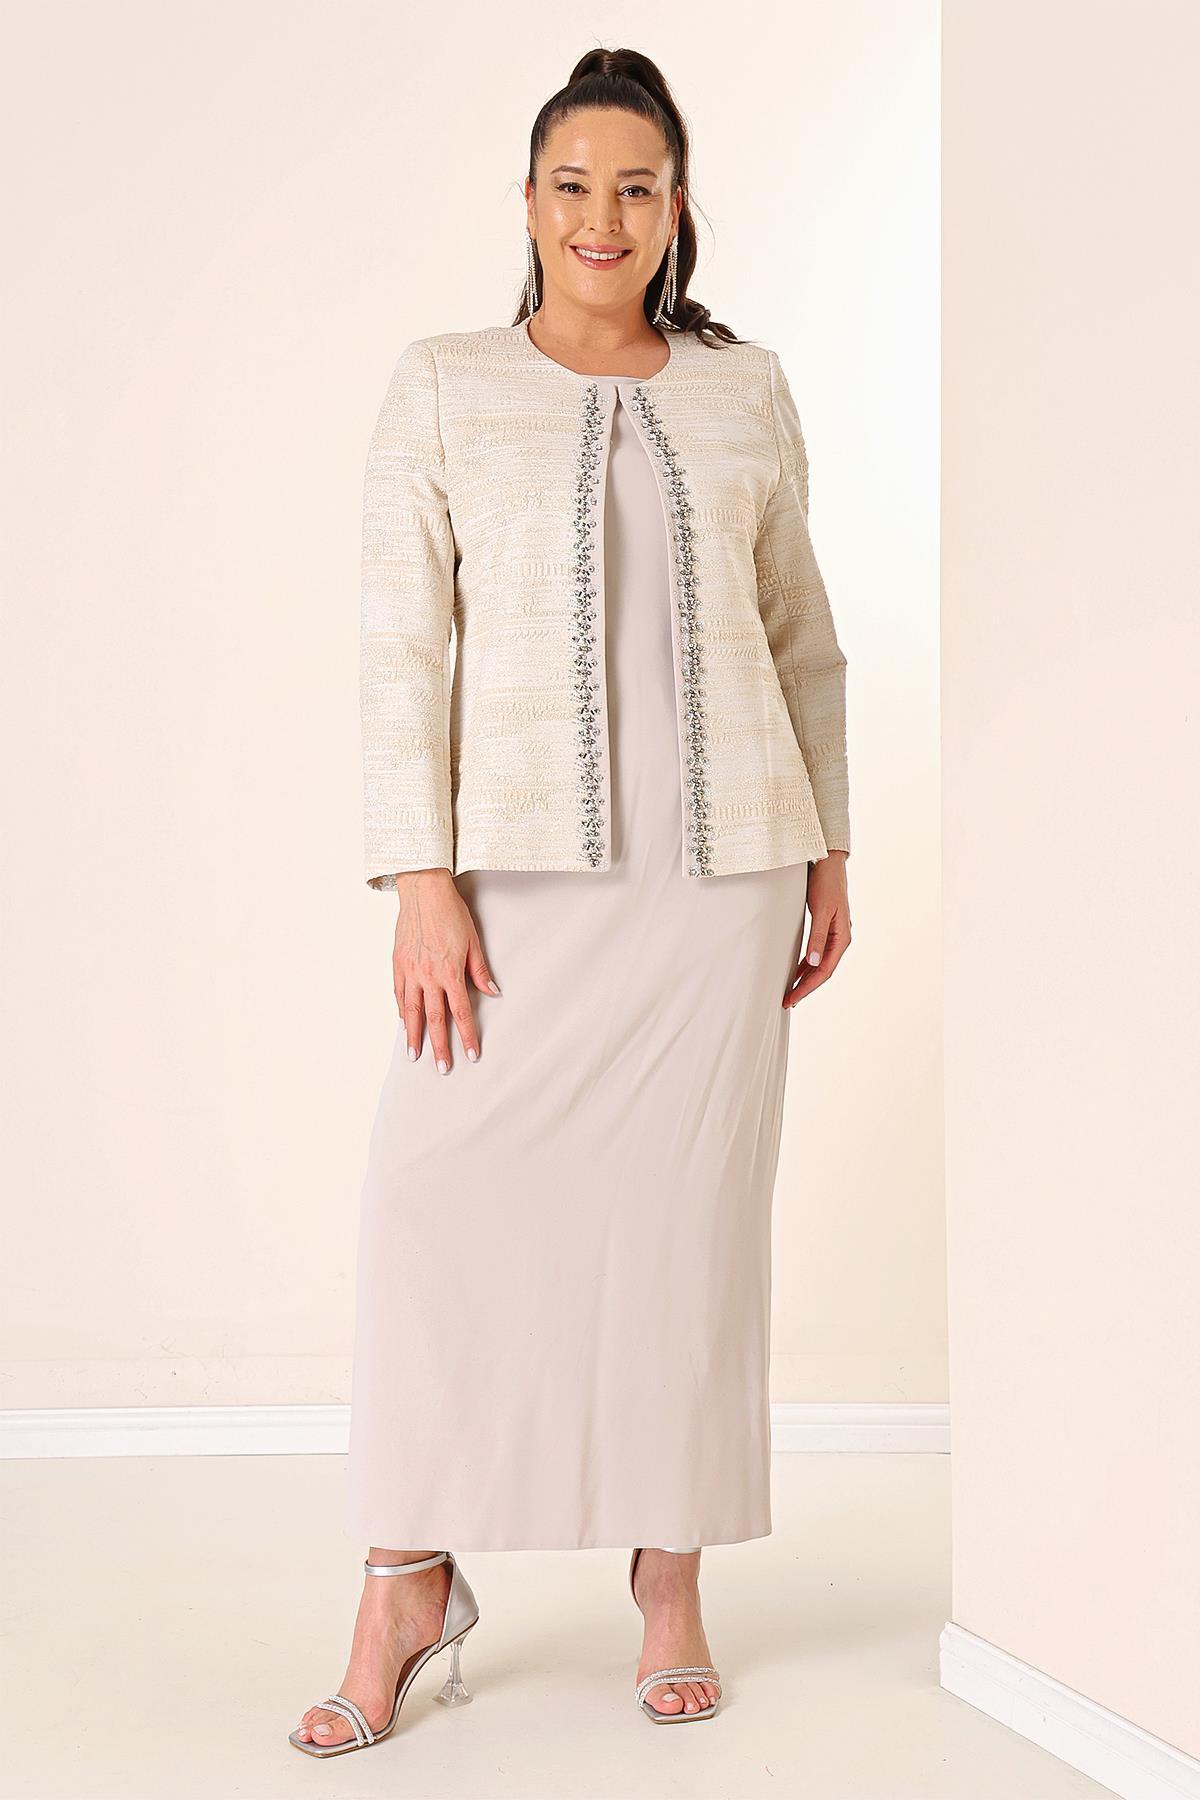 Levně By Saygı Sleeveless Long Dress Stone Detailed Jacquard Plus Size Lined 2-Piece Suit